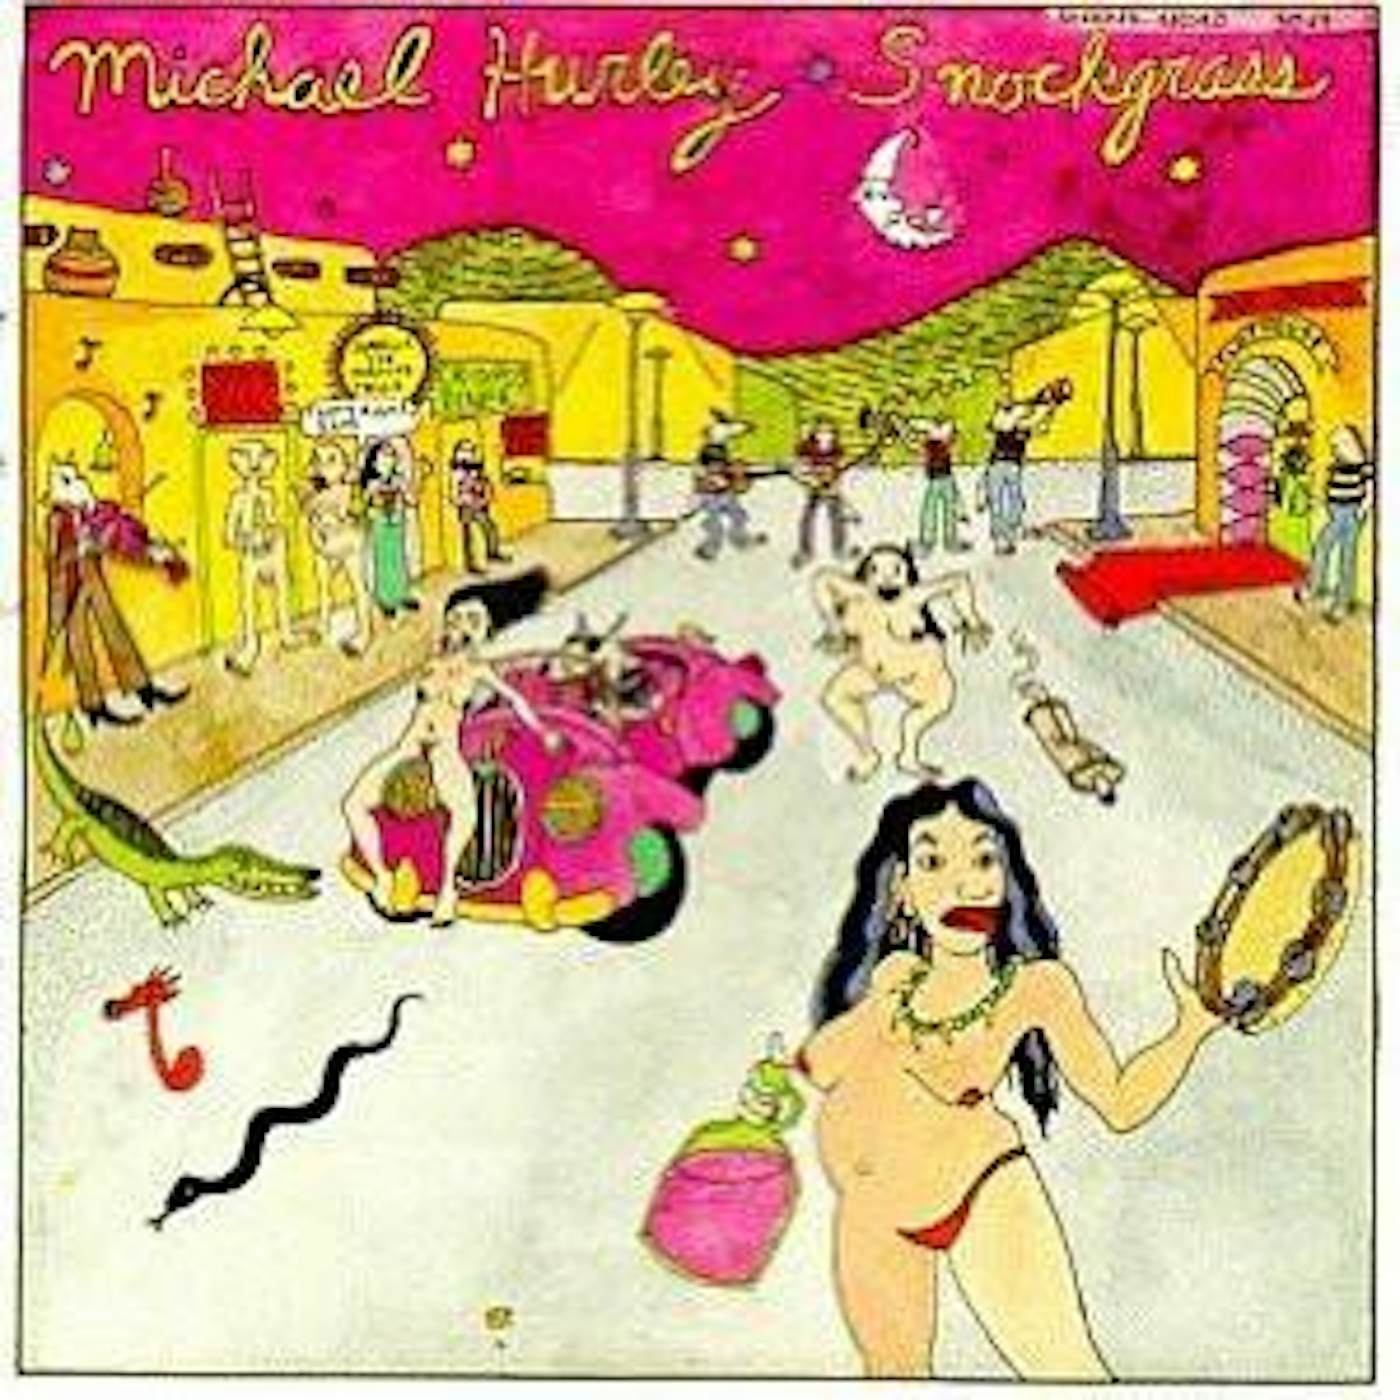 Michael Hurley SNOCKGRASS CD